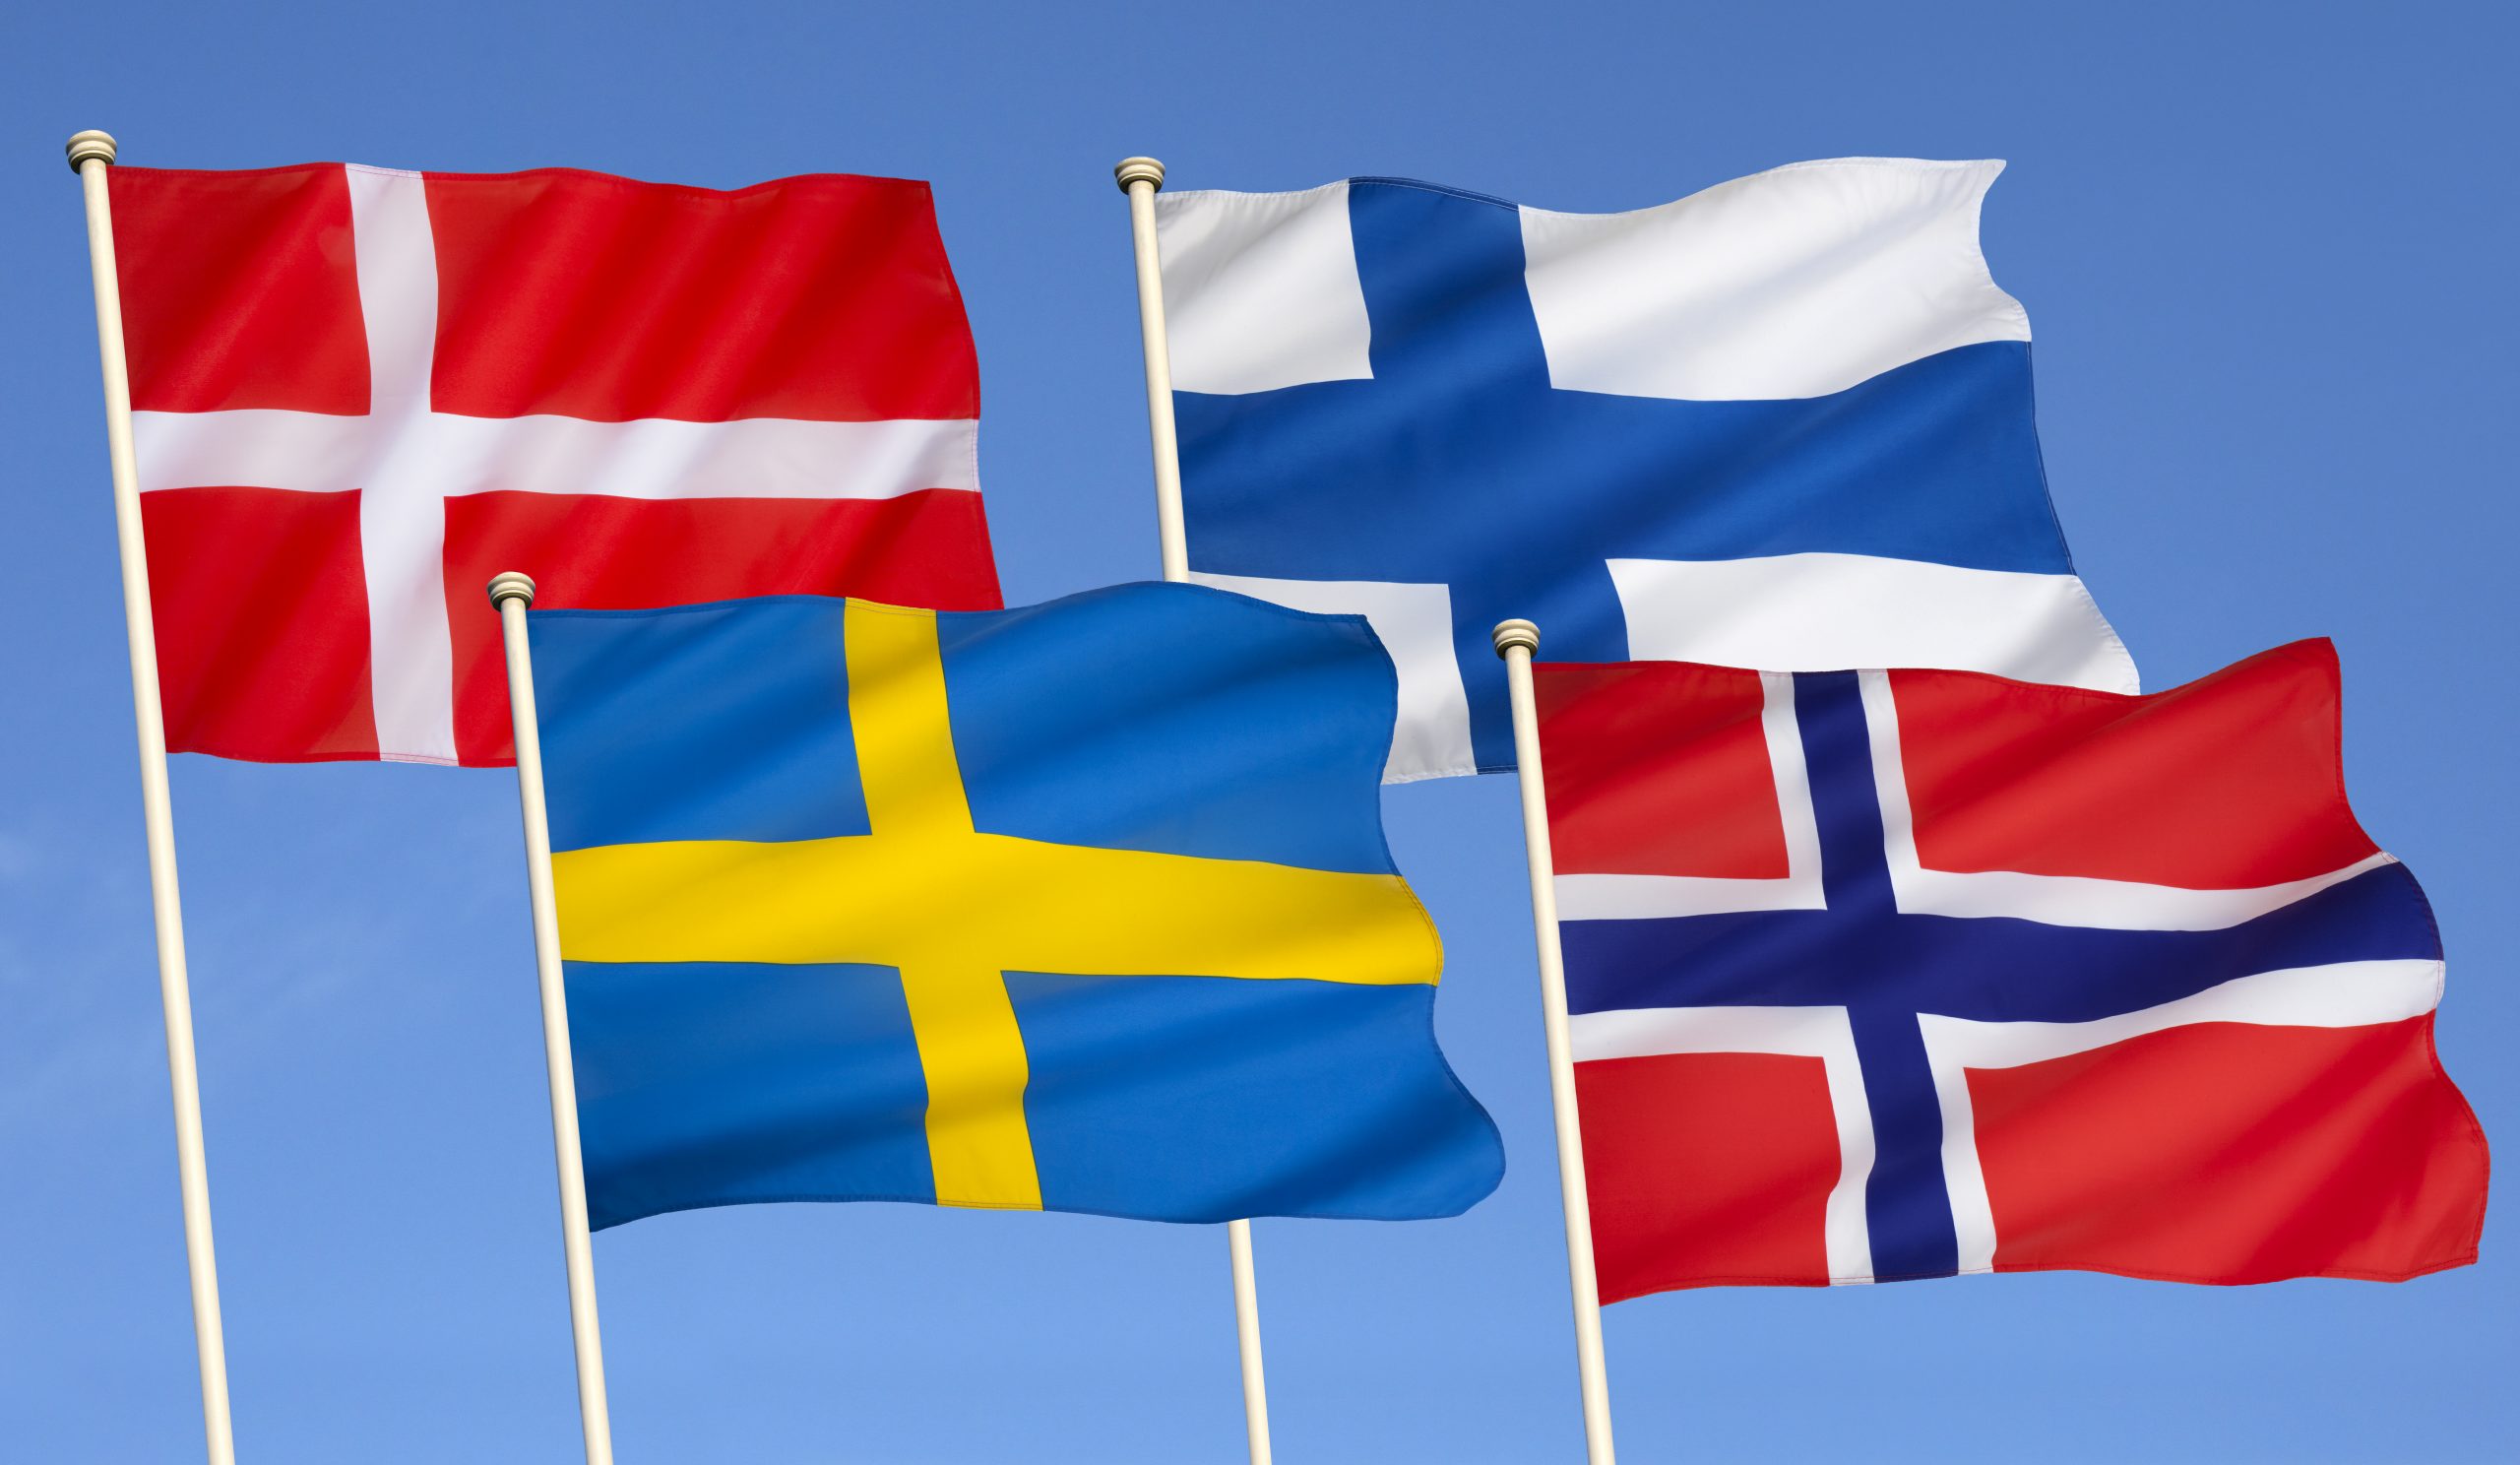 flags-of-scandinavia-denmark-finland-sweden-an-2021-08-29-01-21-57-utc-scaled.jpg